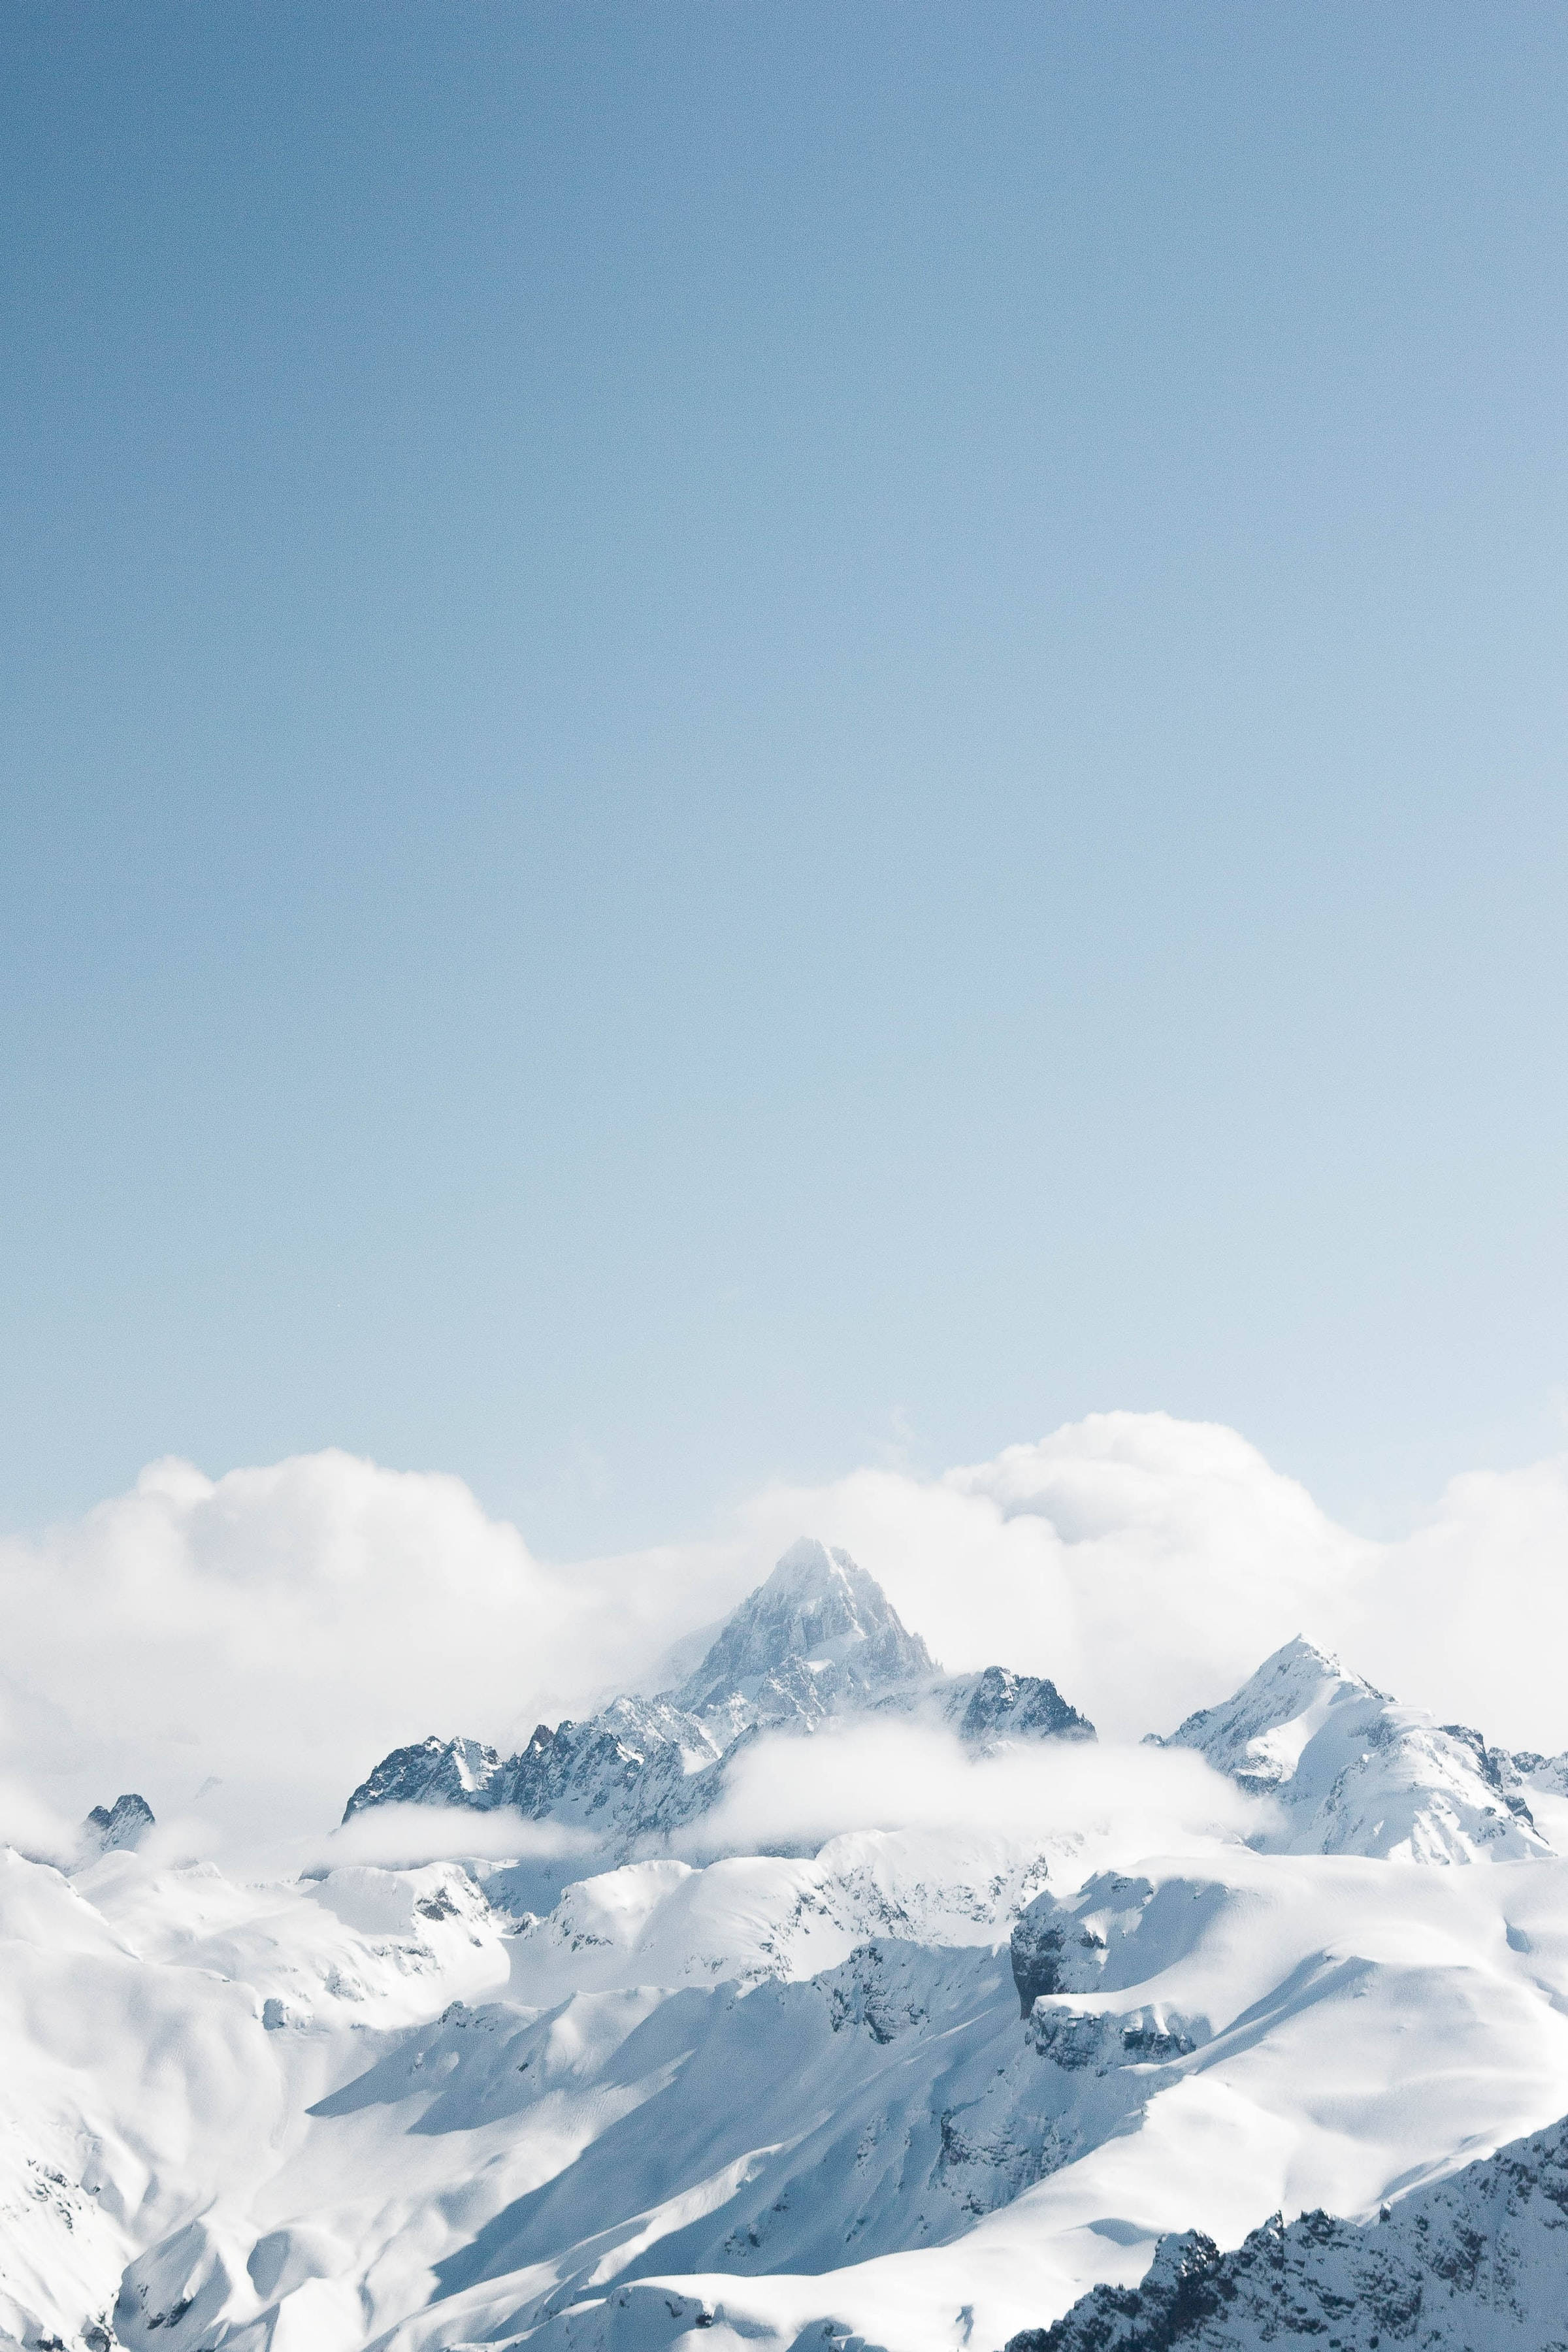 Caption: Enchanting Blue Aesthetic- Mountain Snow Under The Sky Wallpaper